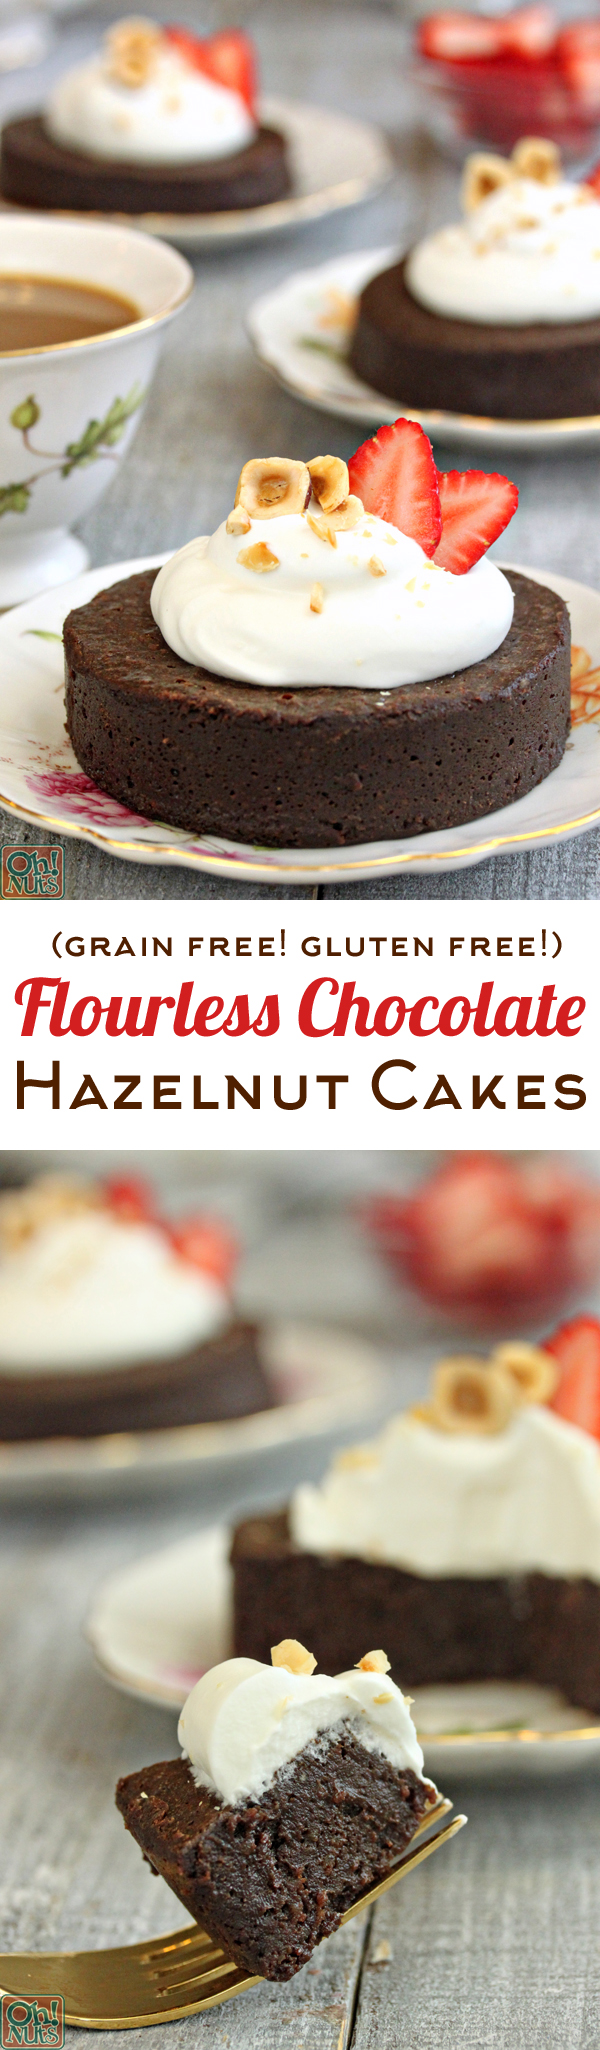 Flourless Chocolate Hazelnut Cakes | From OhNuts.com